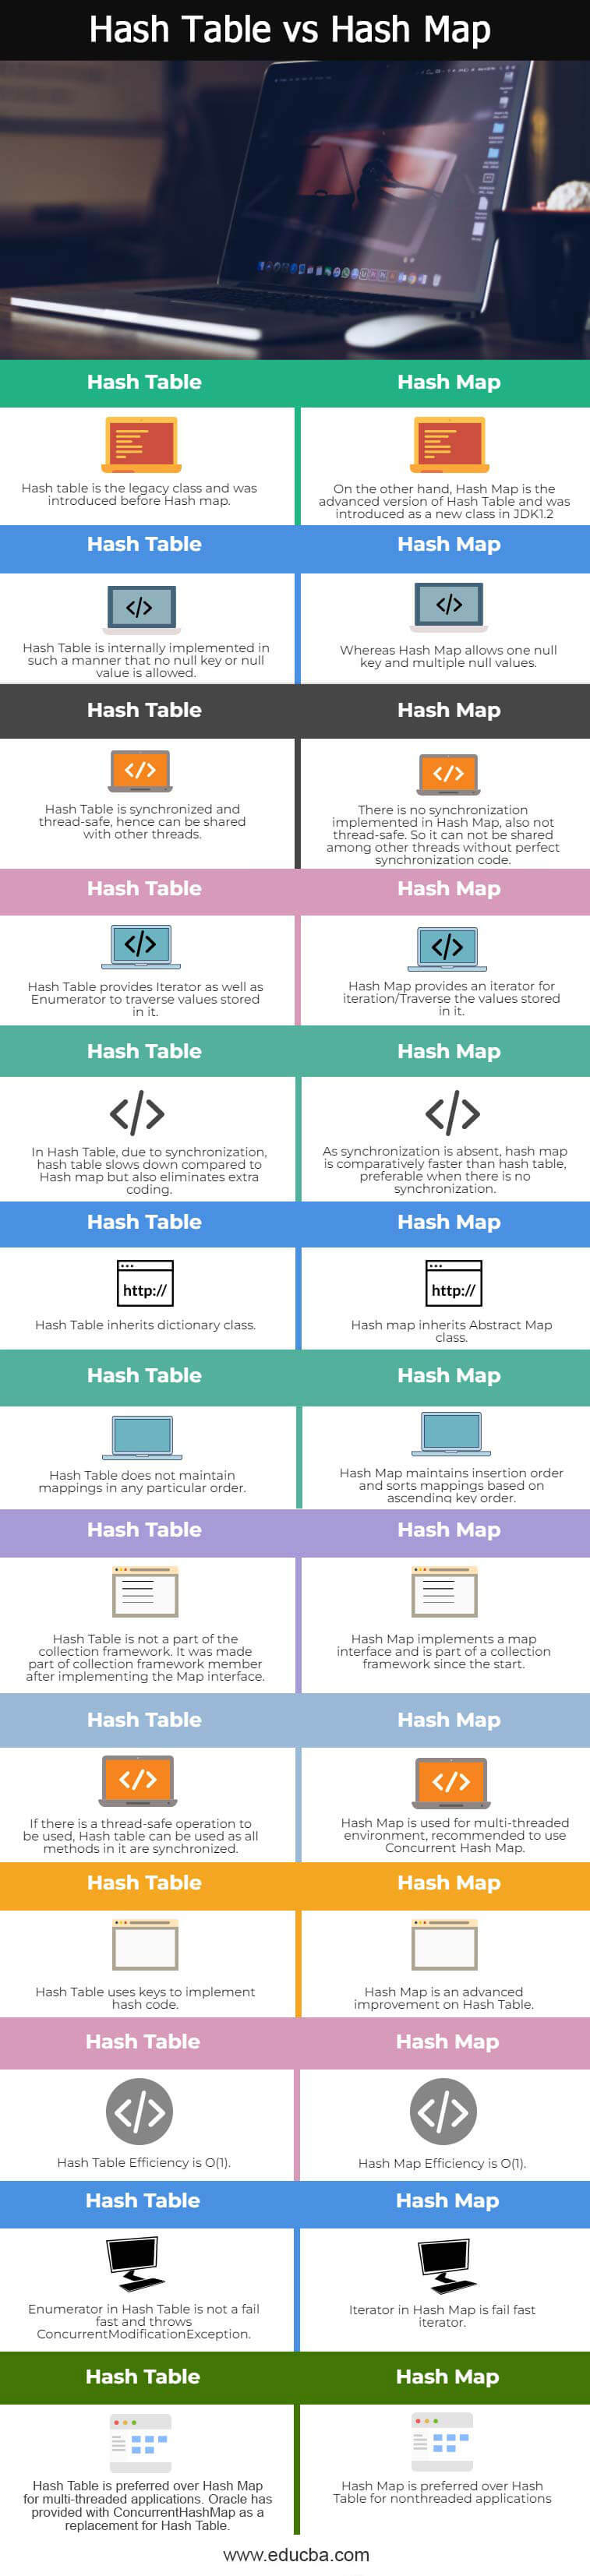 Hash-Table-vs-Hash-Map-info